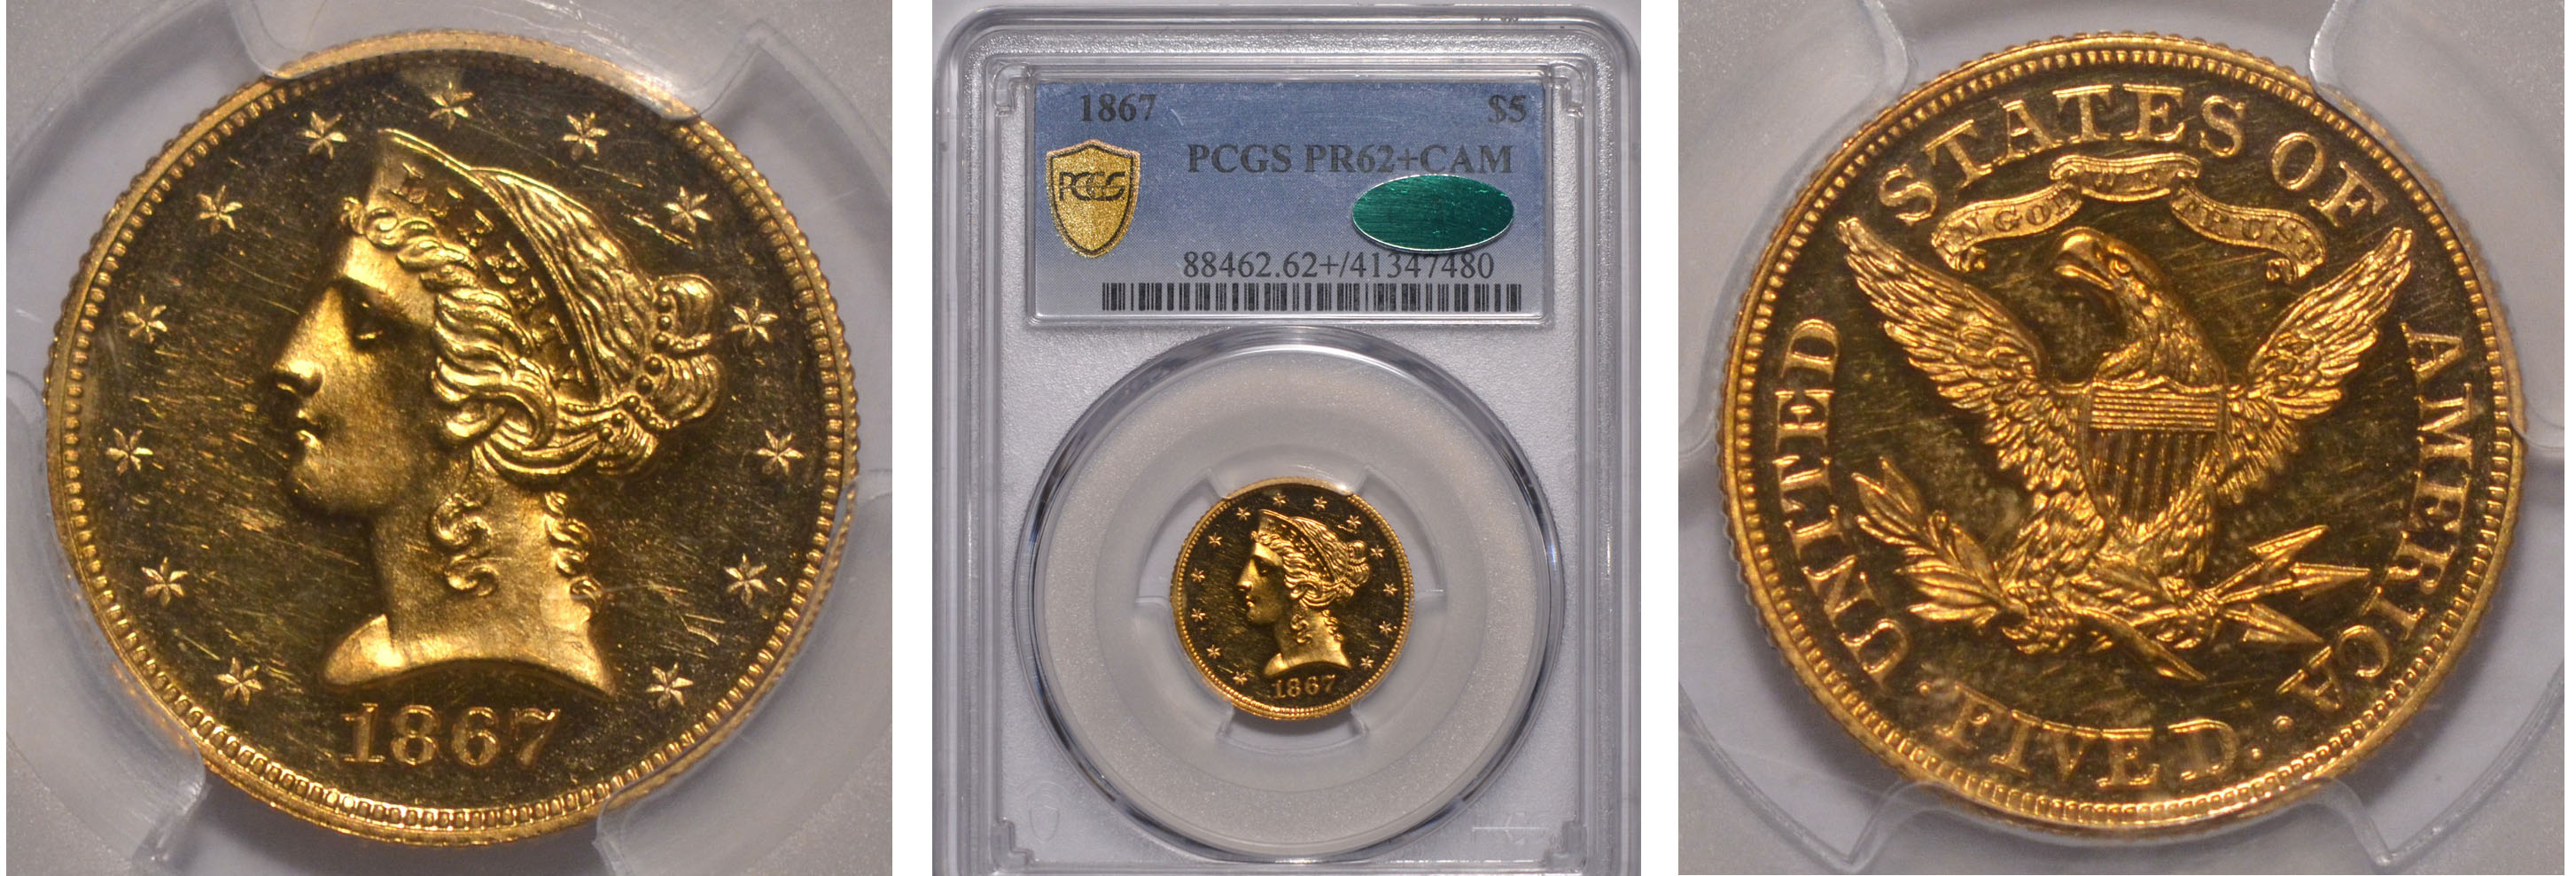 1867 Gold Half Eagle $5 PCGS PF62+ CAM CAC